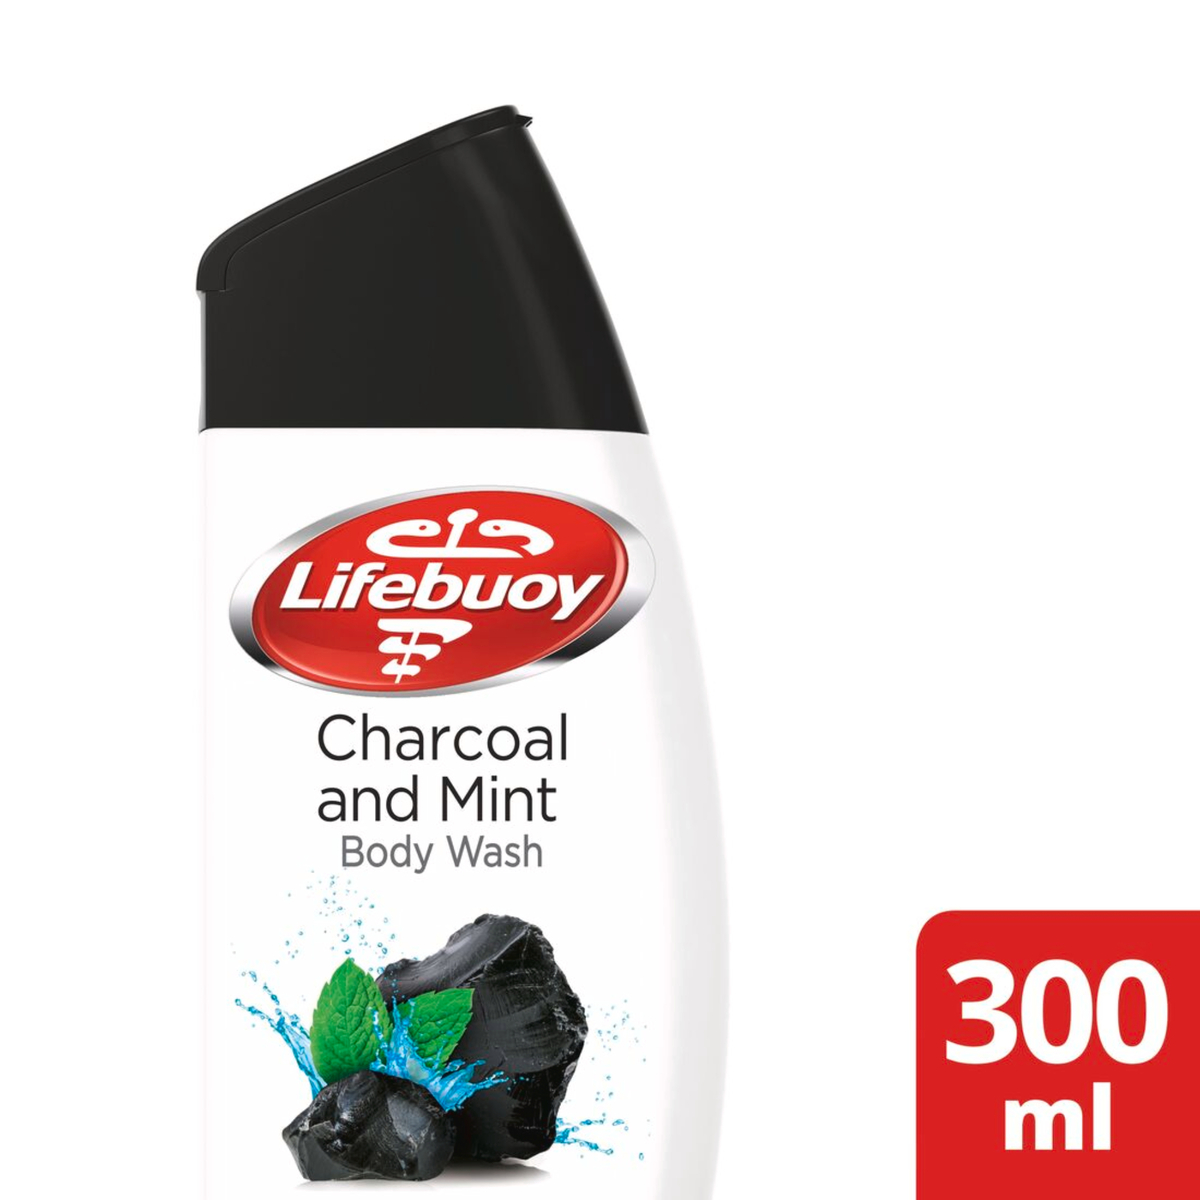 Lifebuoy Charcoal and Mint Body Wash 300ml + Loofah